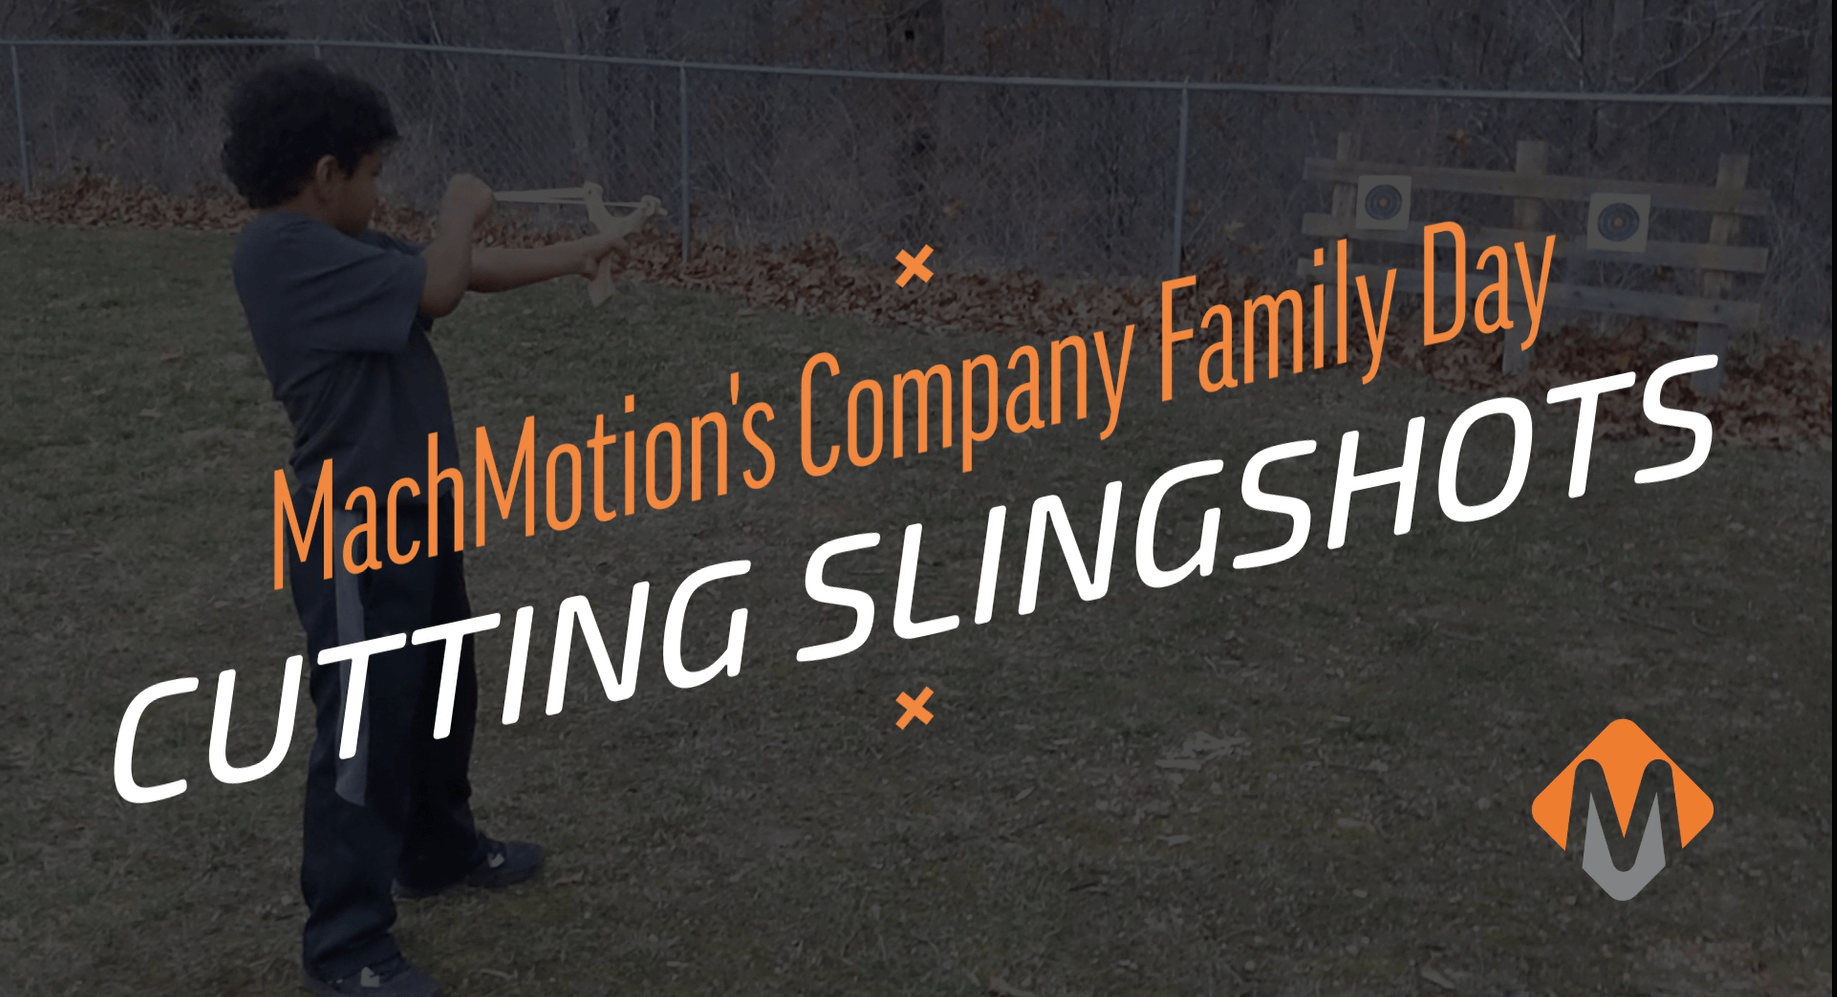 MachMotion Cutting SlingShots Company Family Day